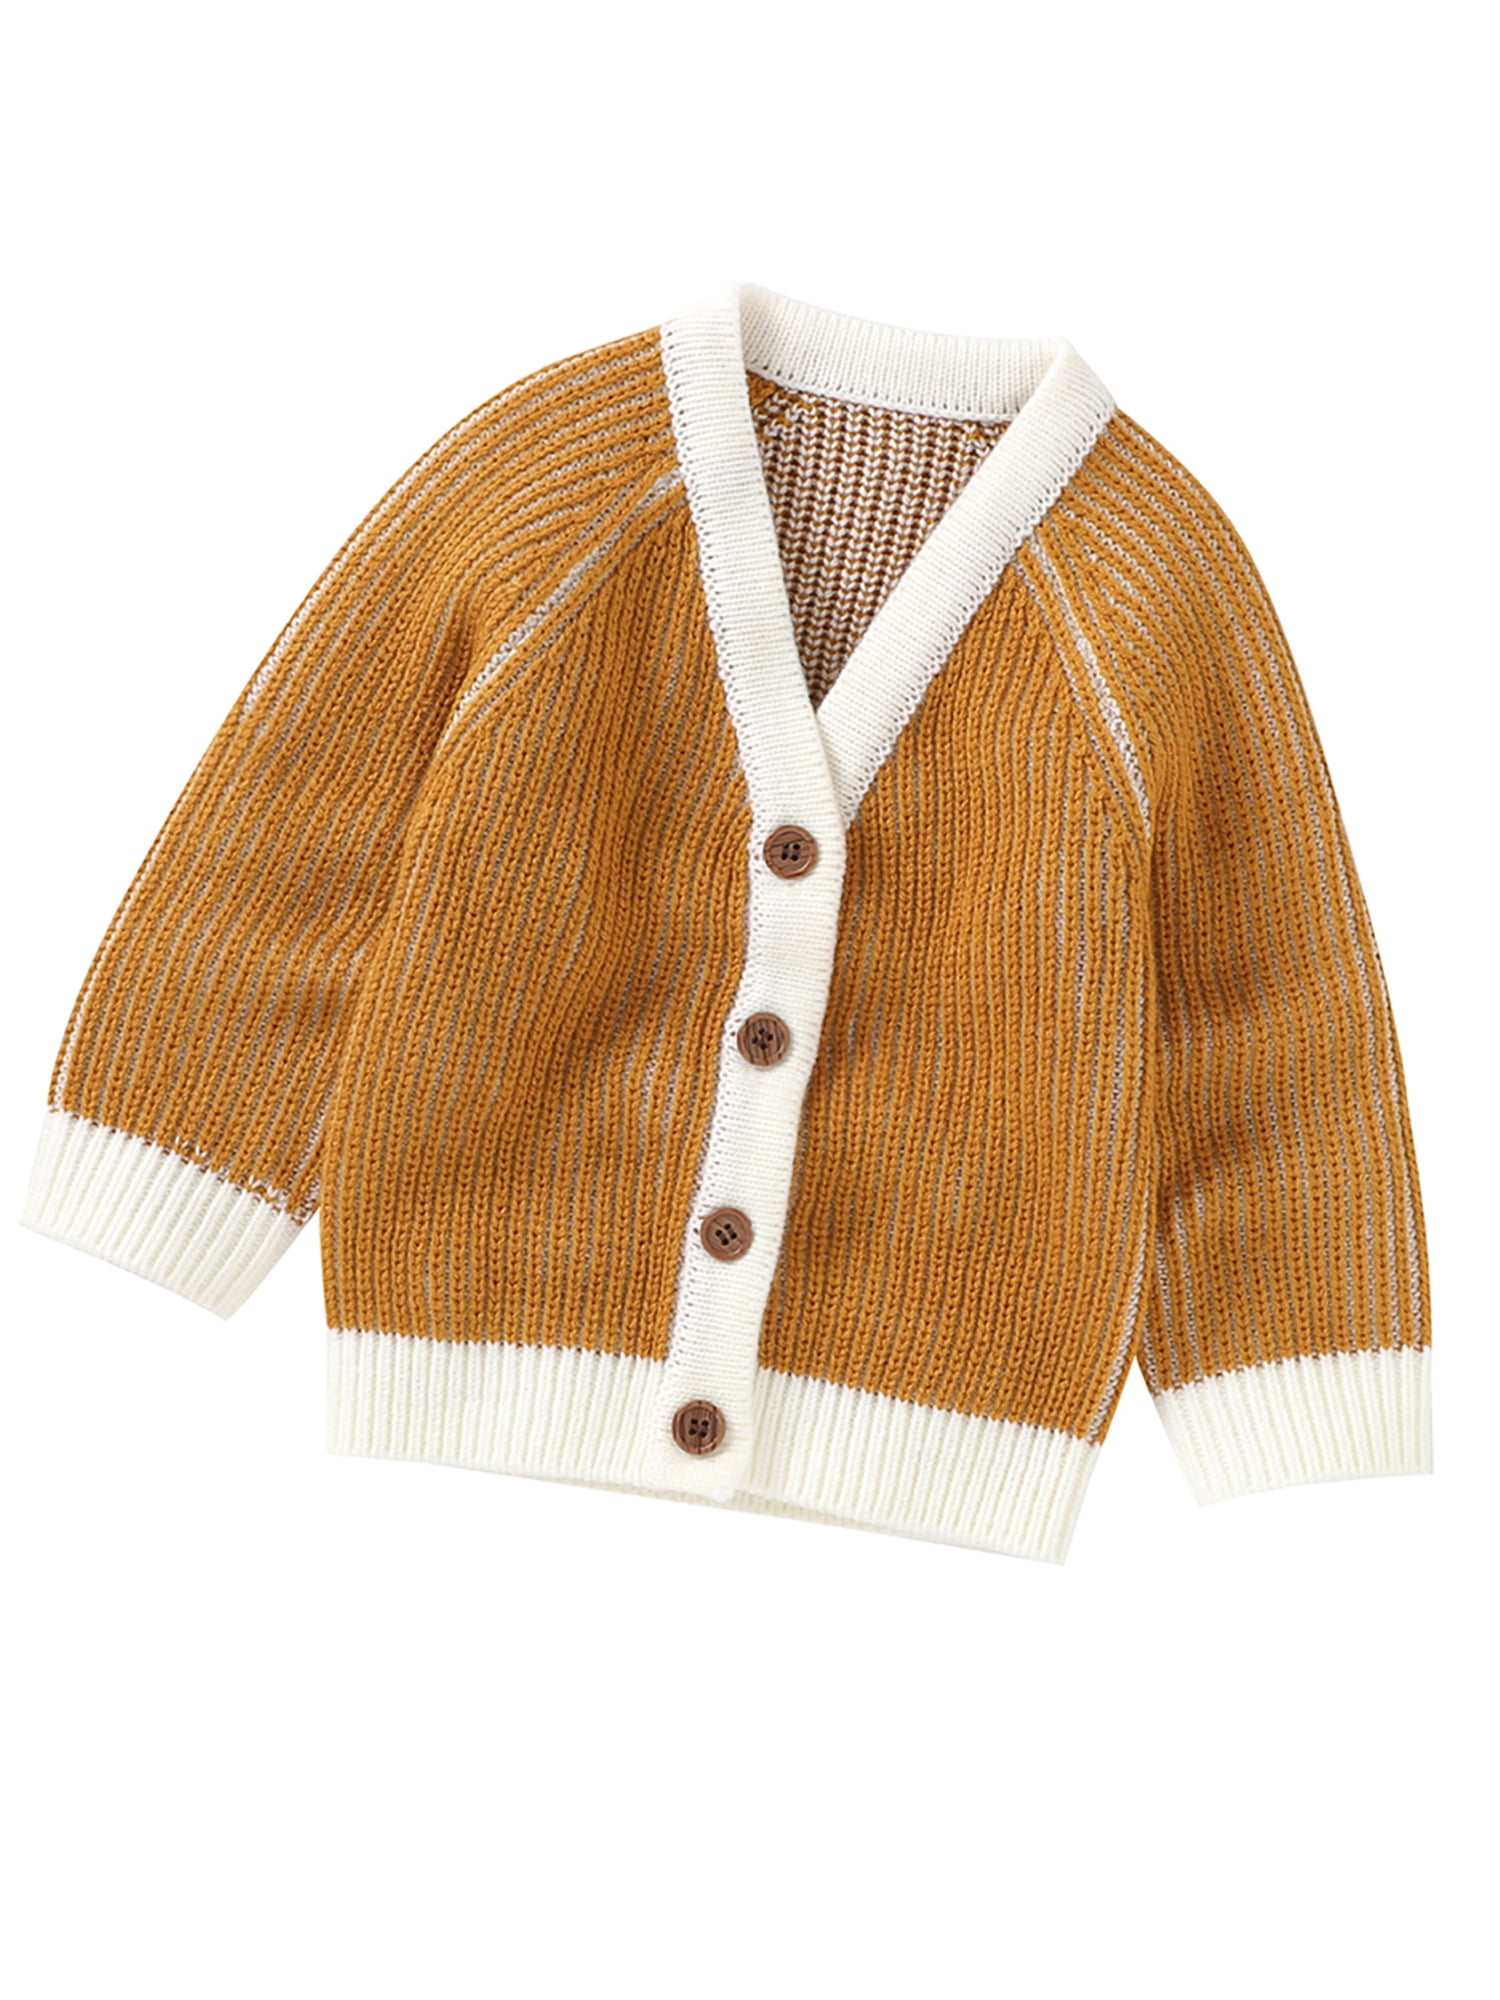 Unisex Toddler Baby Kid Girl Boys Sweater Knit Warm Coat Cardigan Jacket Clothes